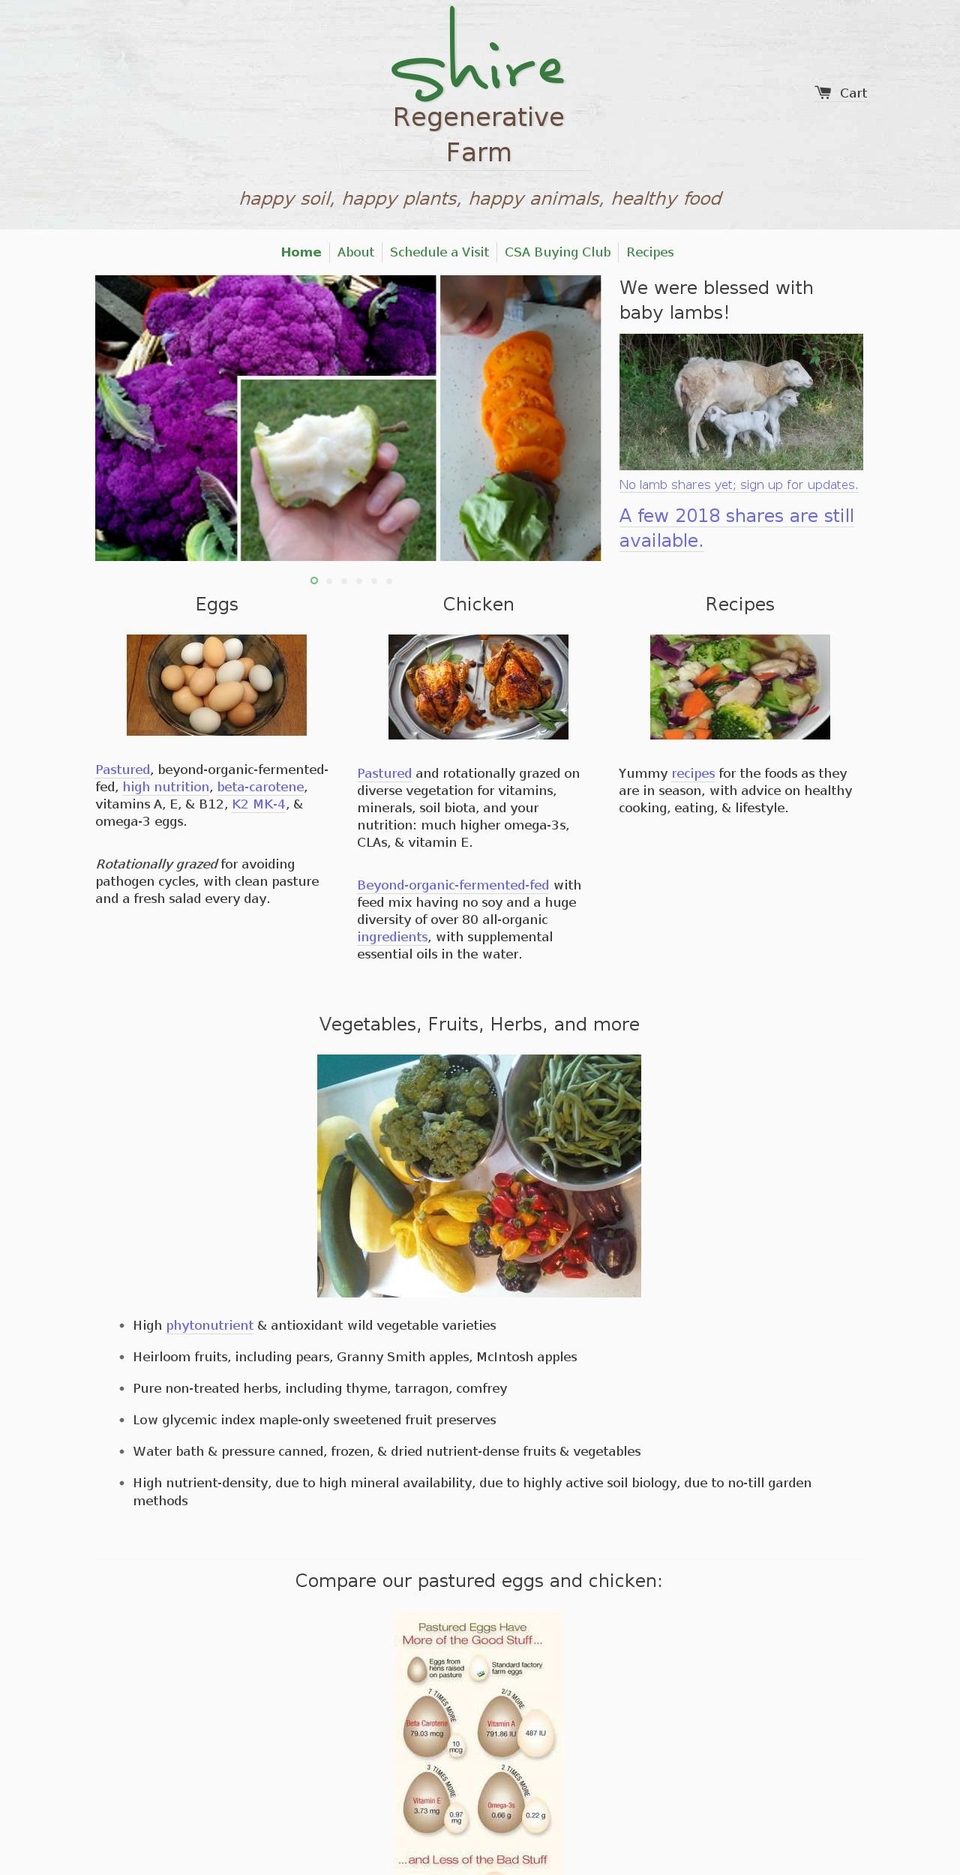 shireregenerative.farm shopify website screenshot